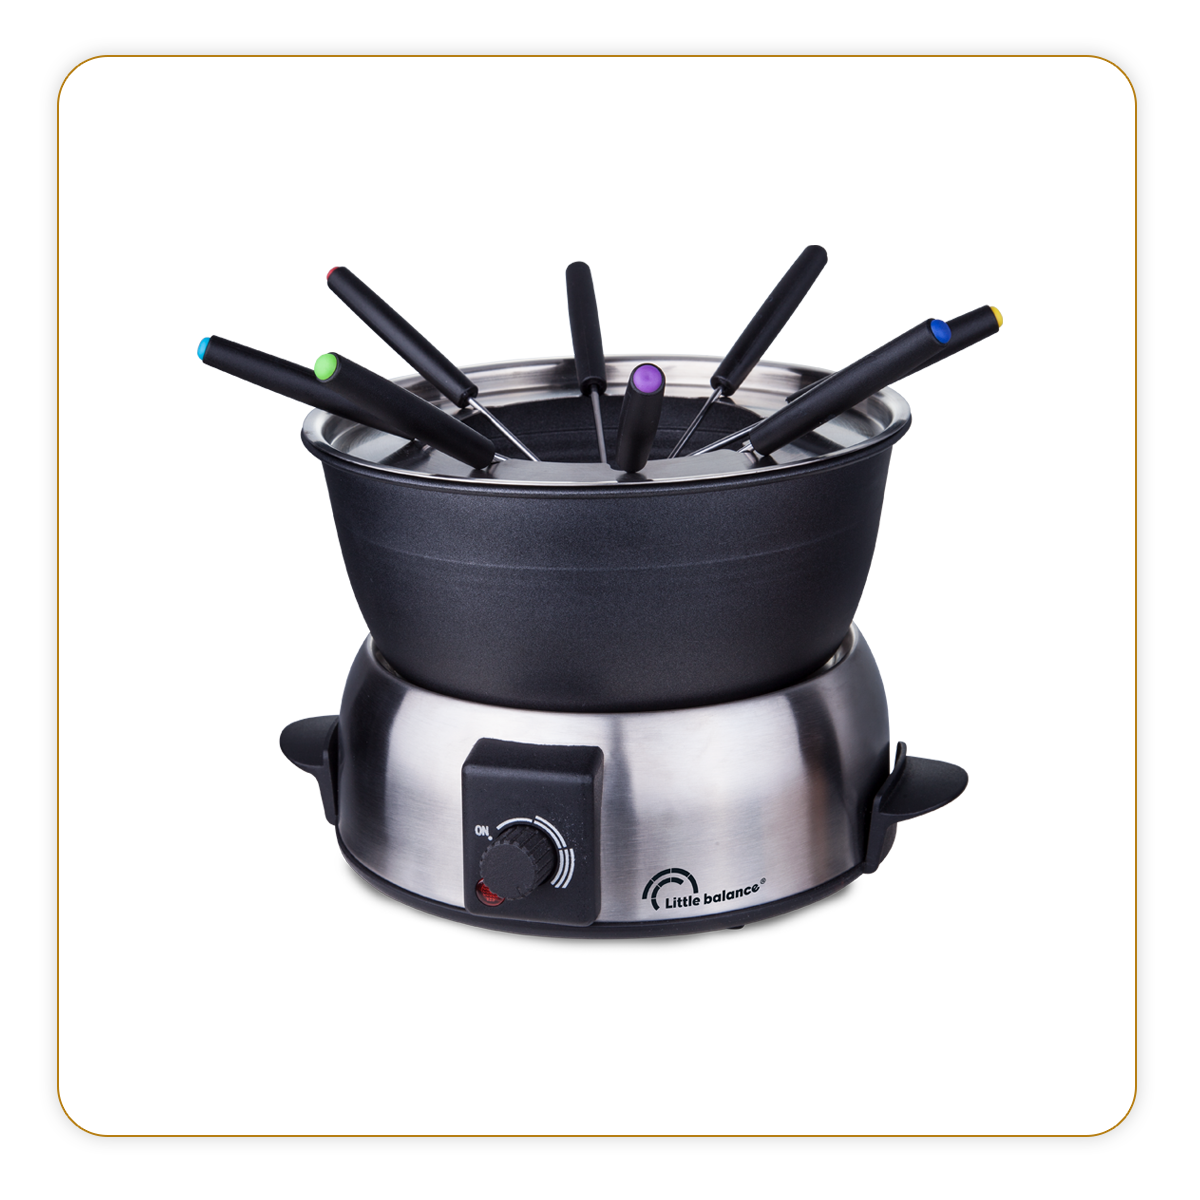 Inox & Design appareil à fondue - Raclette & Fondue